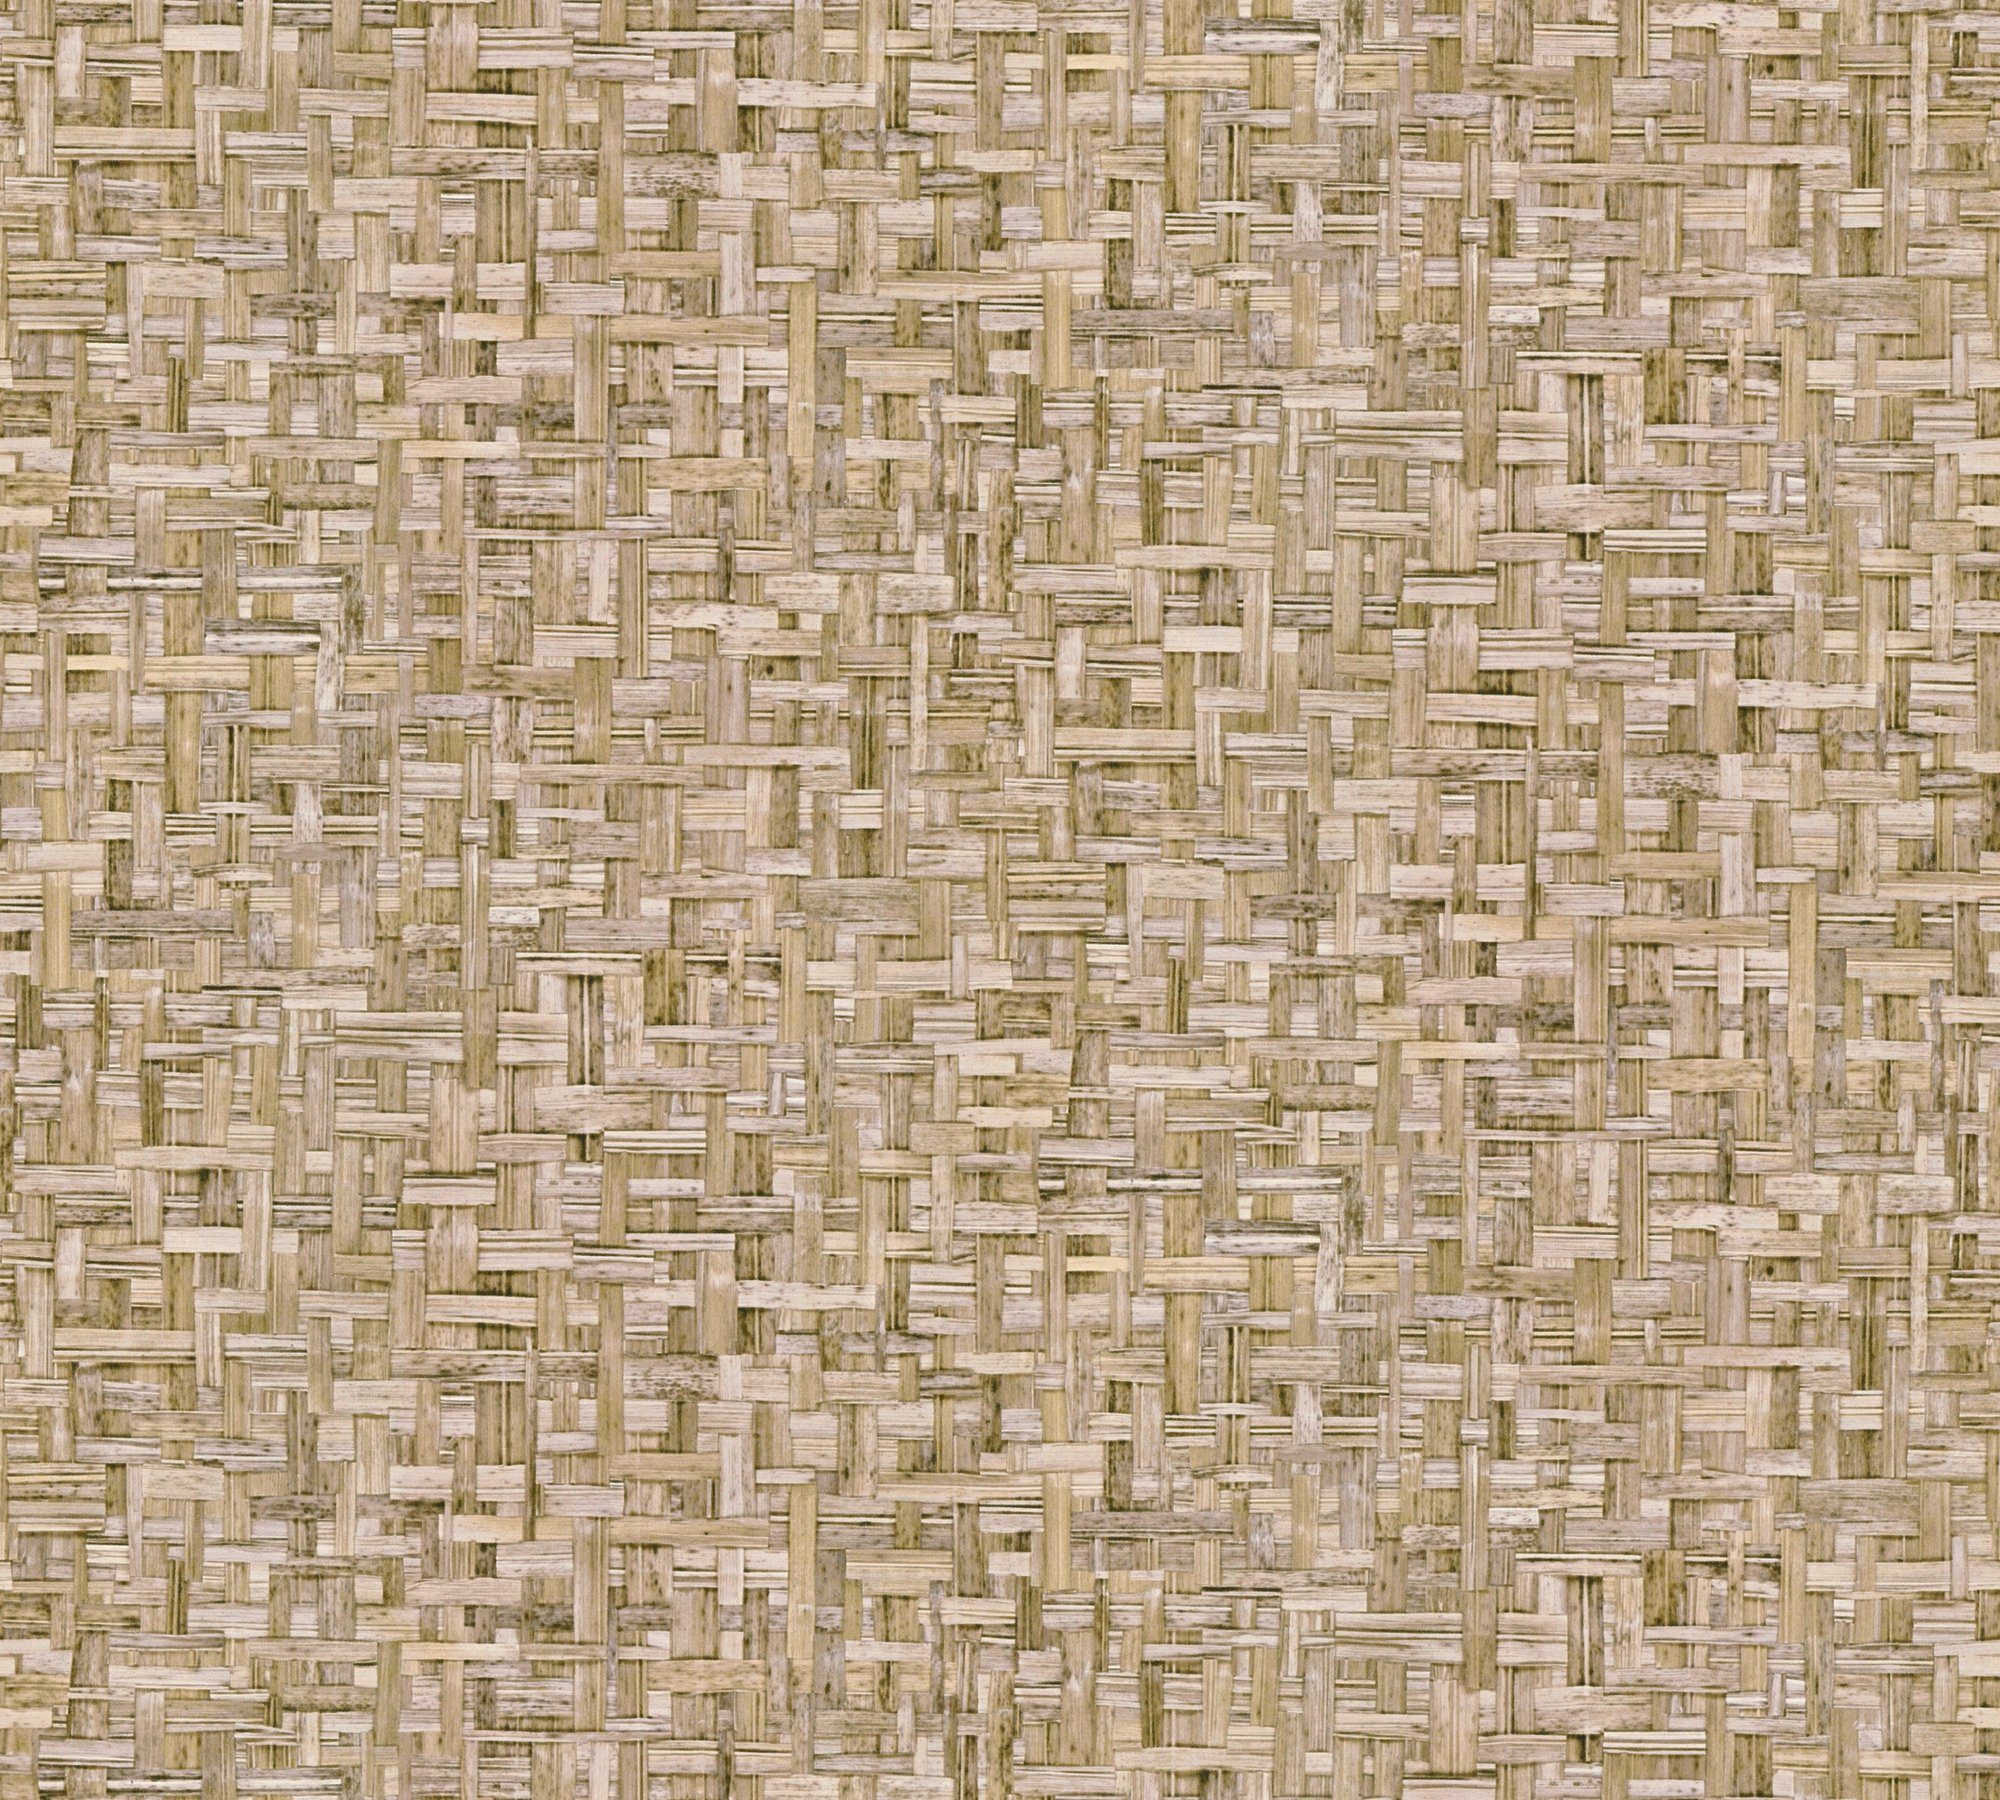 Vliestapete Holzoptik Paper Tapete Architects Jungle glatt, Chic, braun/beige Flechtoptik,